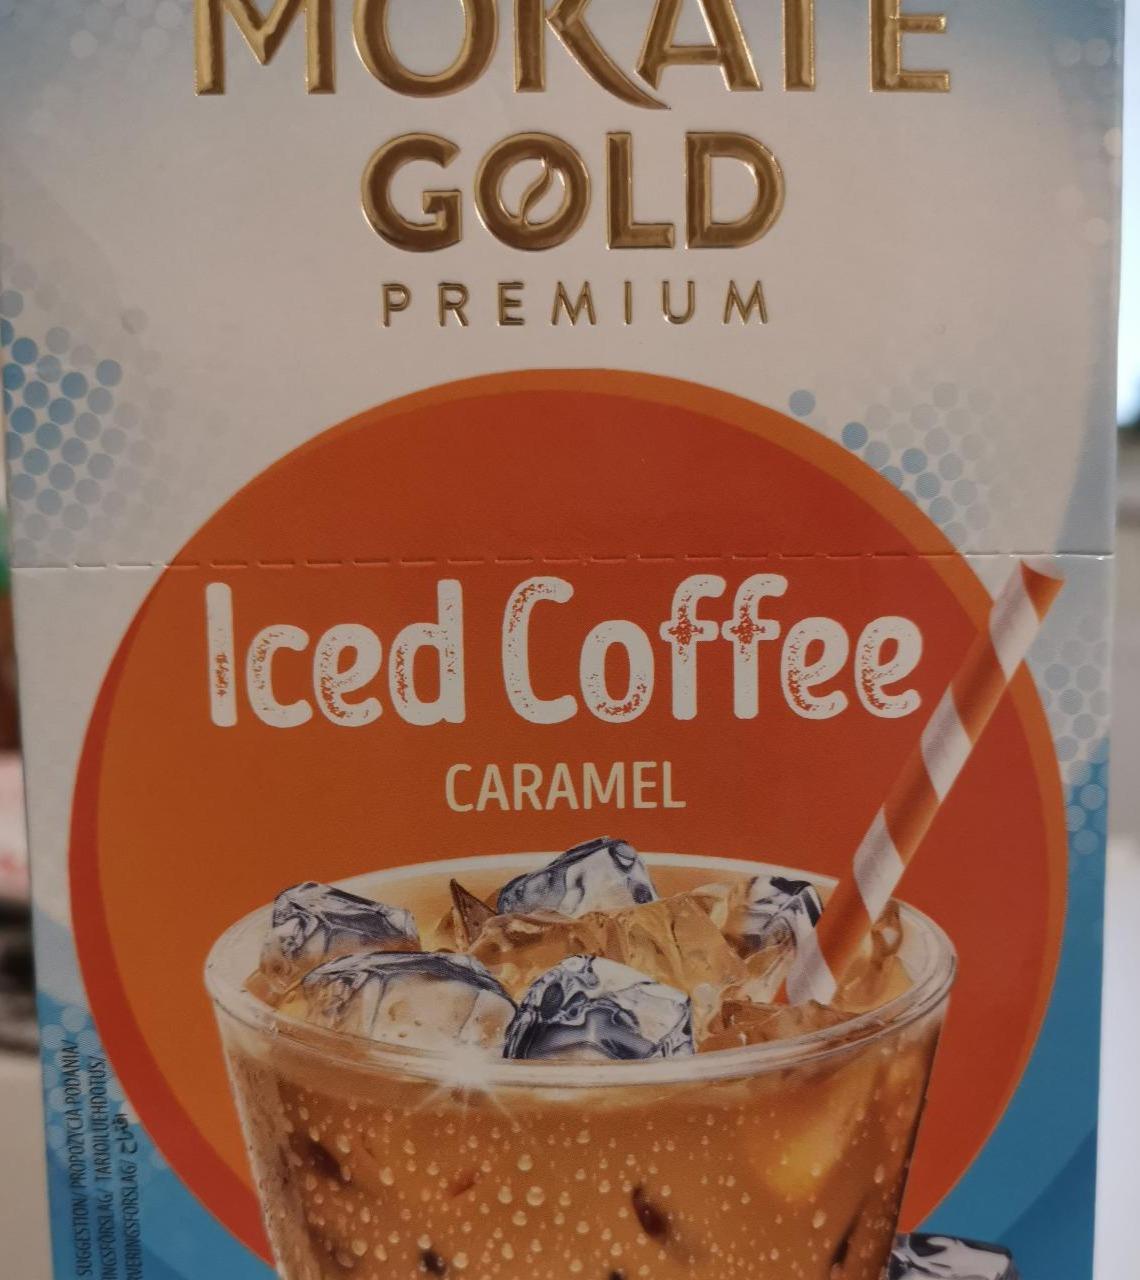 Zdjęcia - Gold Premium Iced Coffee Caramel Mokate